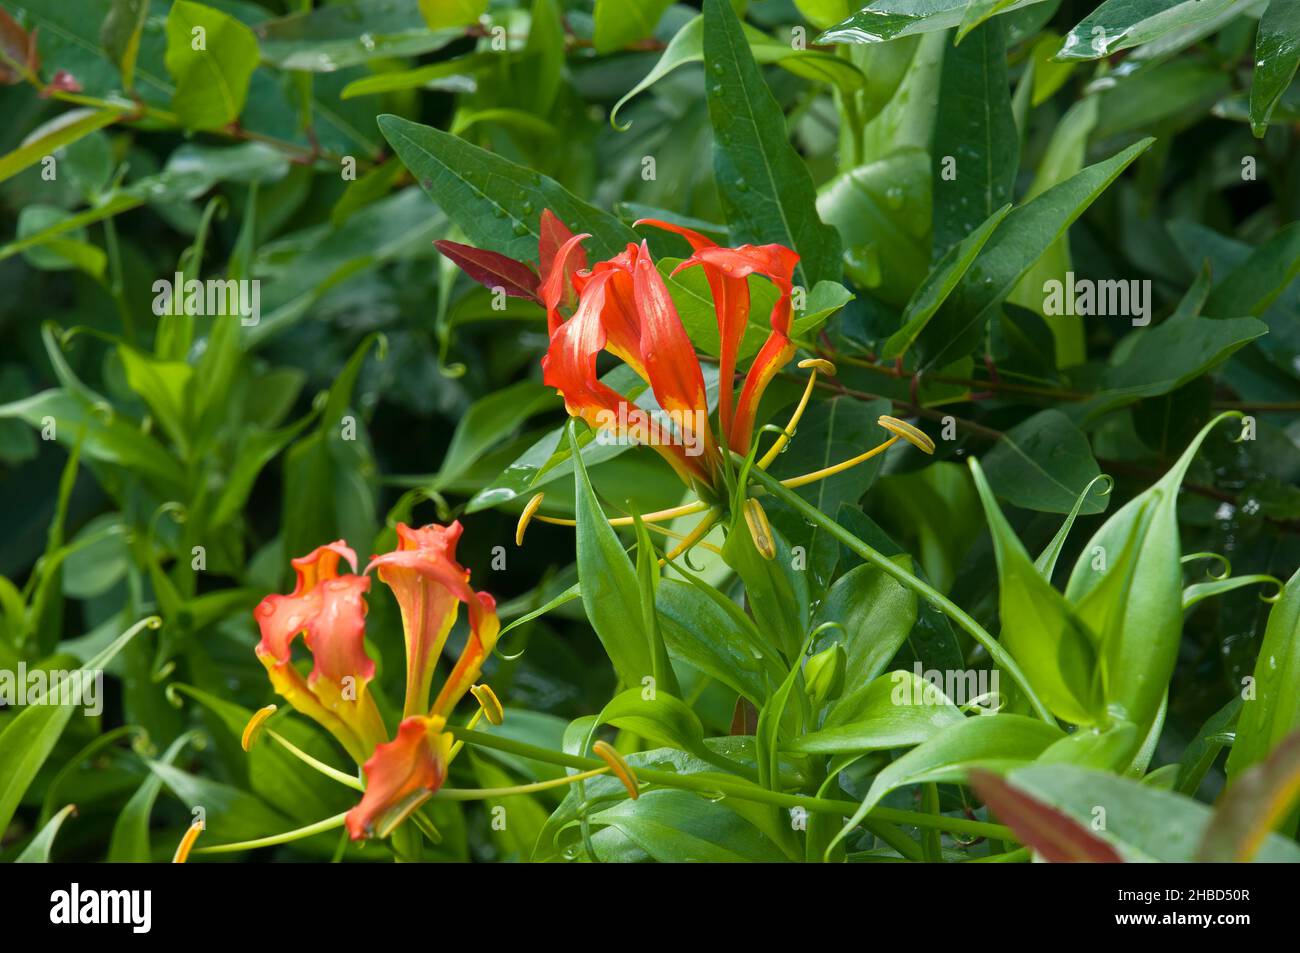 Sydney Australia, orange flowers of a heteropteris syringifolia native to Bolivia, Paraguay and Brazil after rain Stock Photo